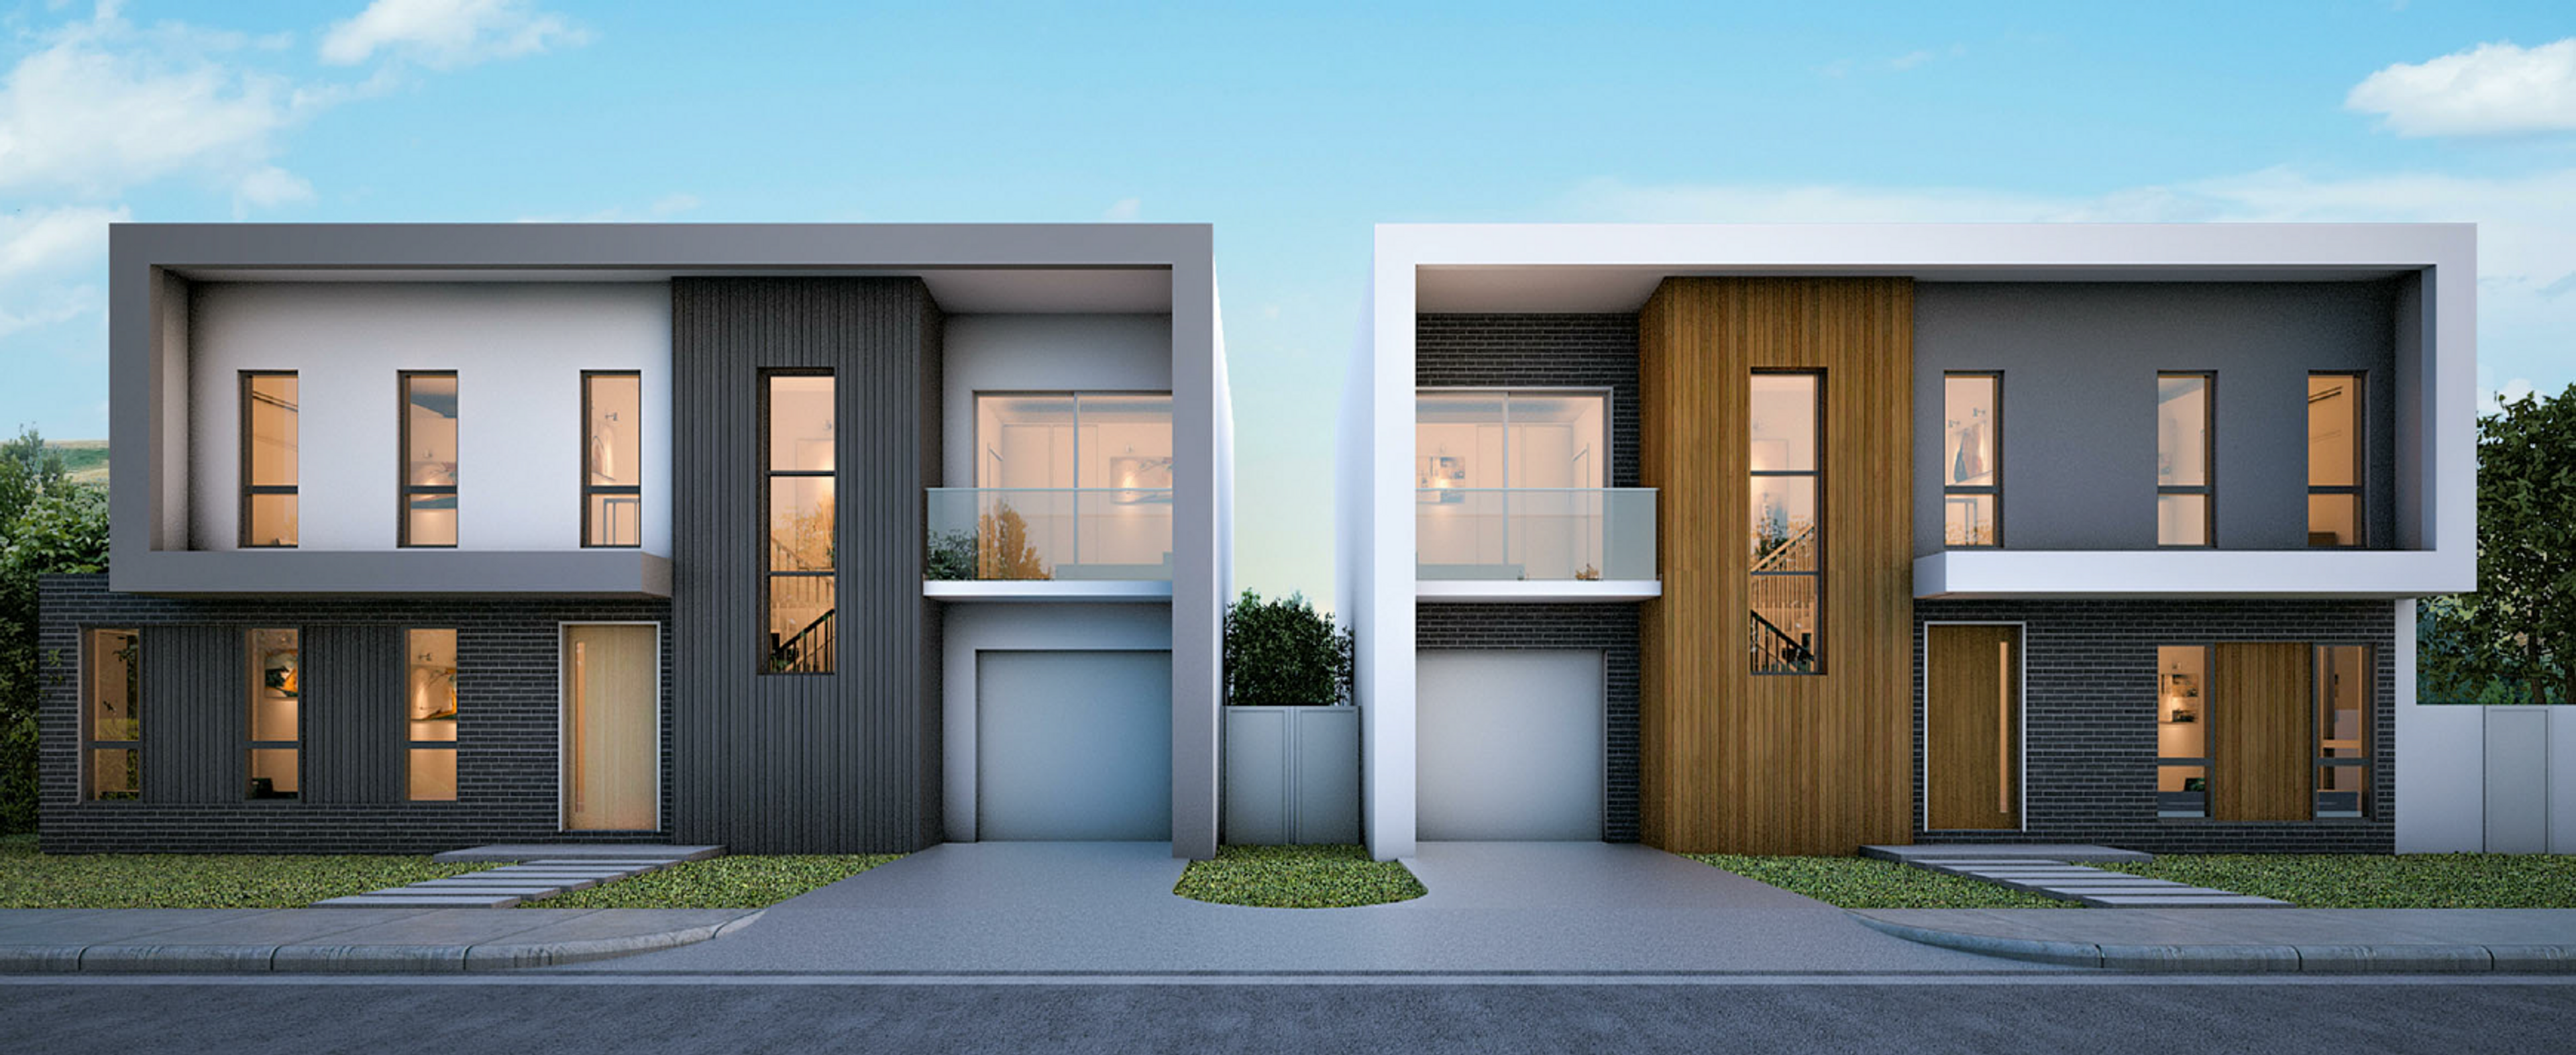 dual occupancy home design